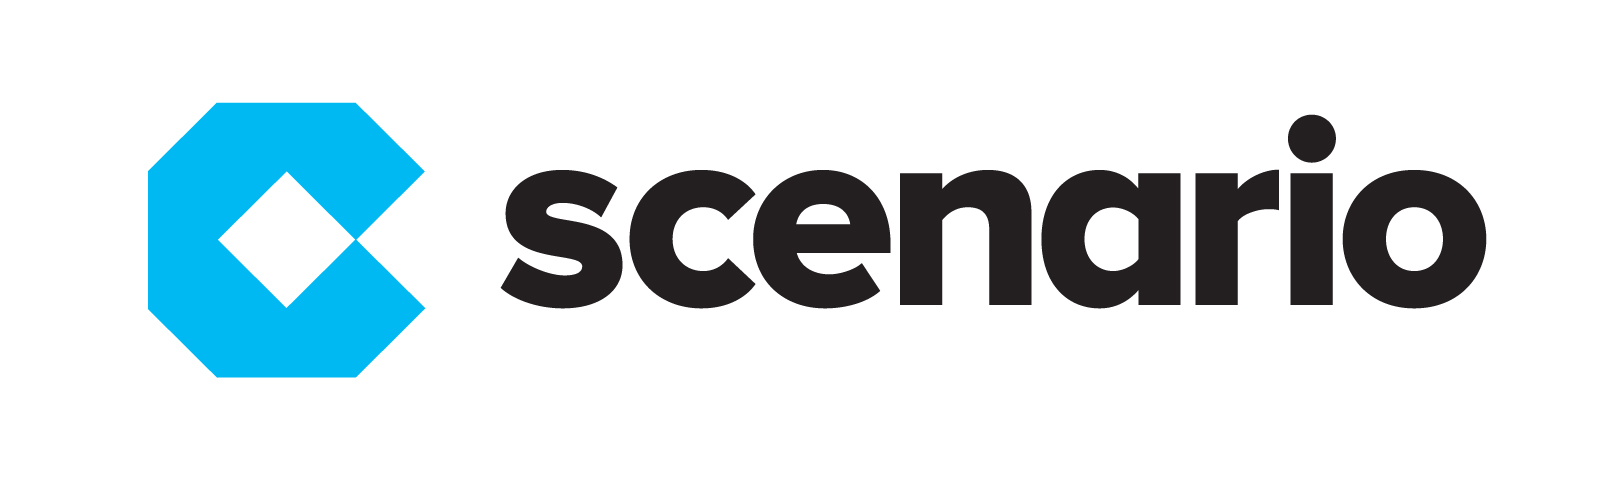 Scenario Cockram Ltd Logo